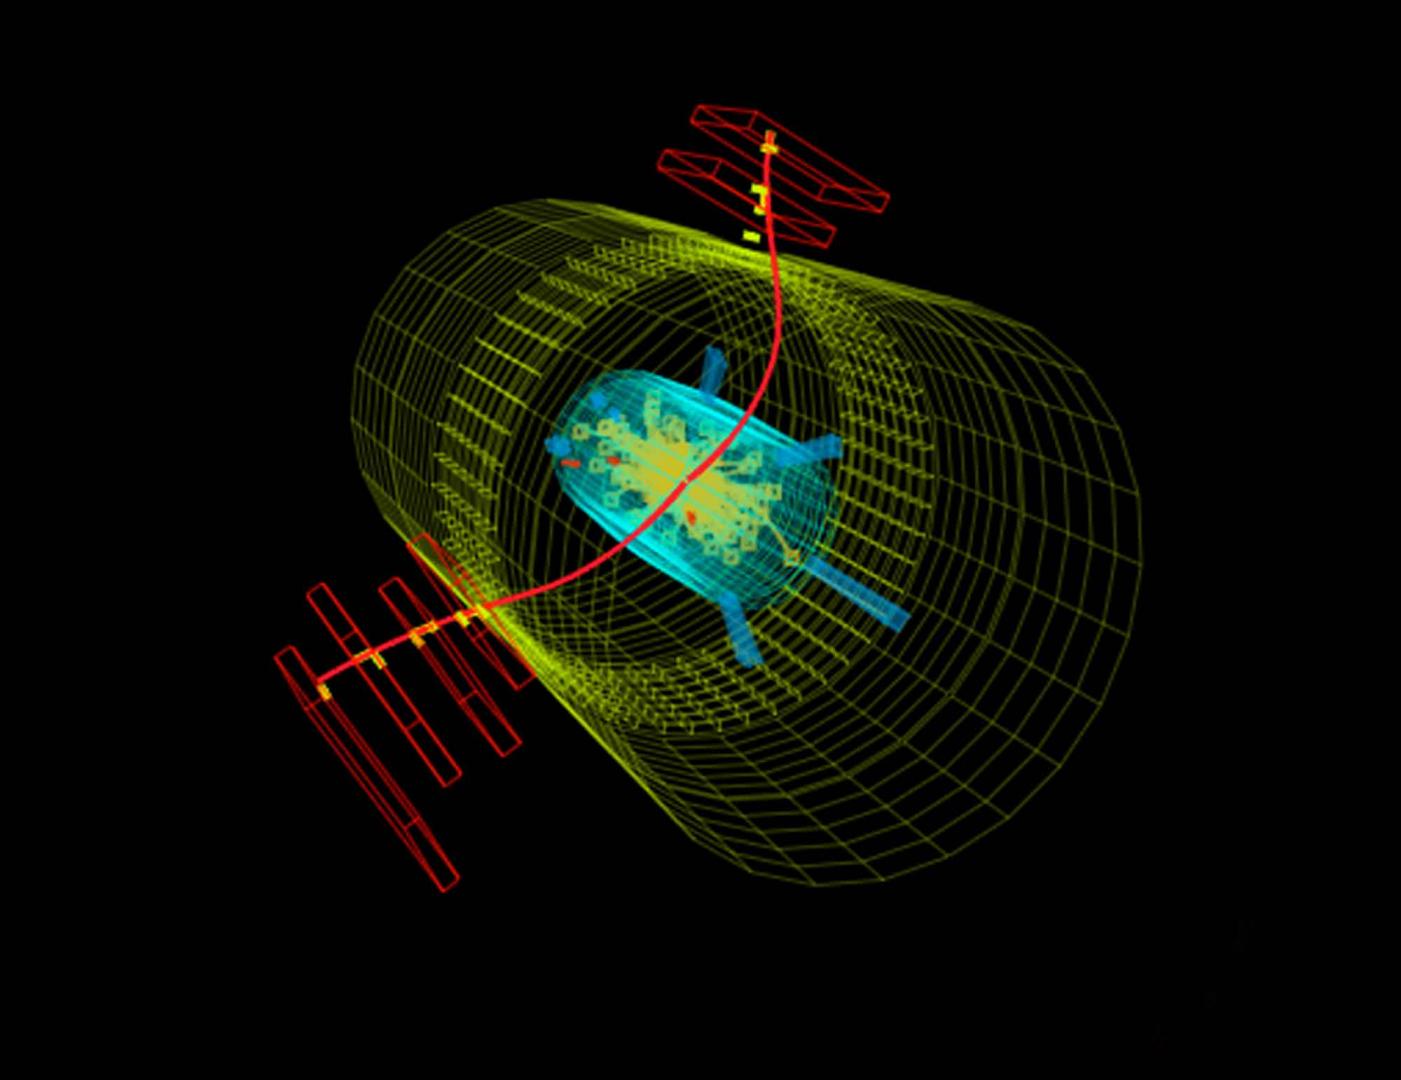 Find a Higgs boson in LHC public data